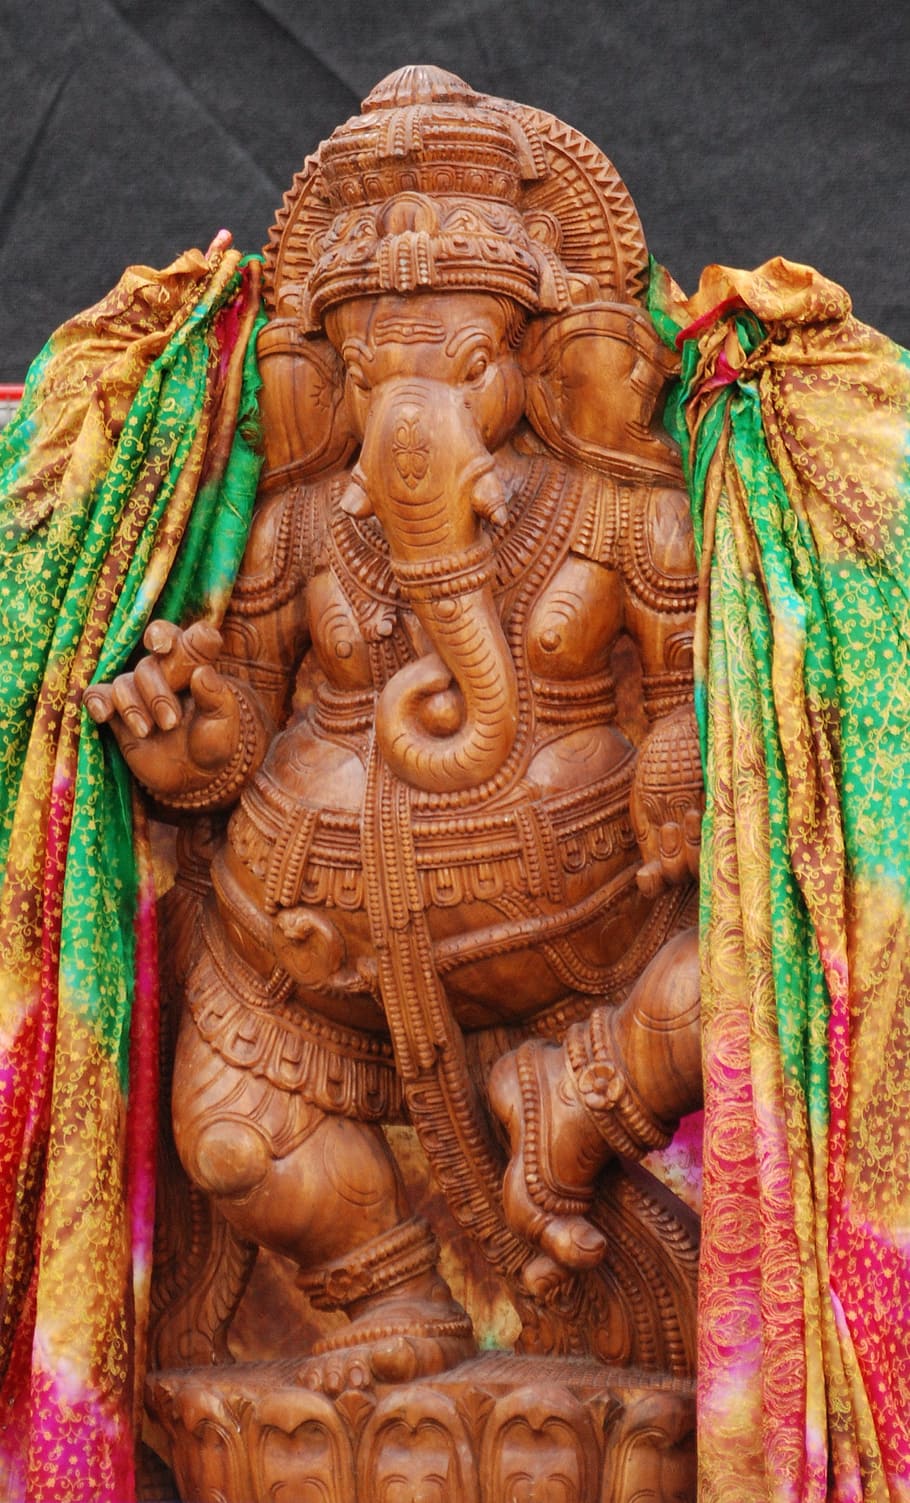 tuan patung Ganesha, Ganesha, gajah, Hindu, Dewa, Asia, India, agama, seni dan kerajinan, close-up